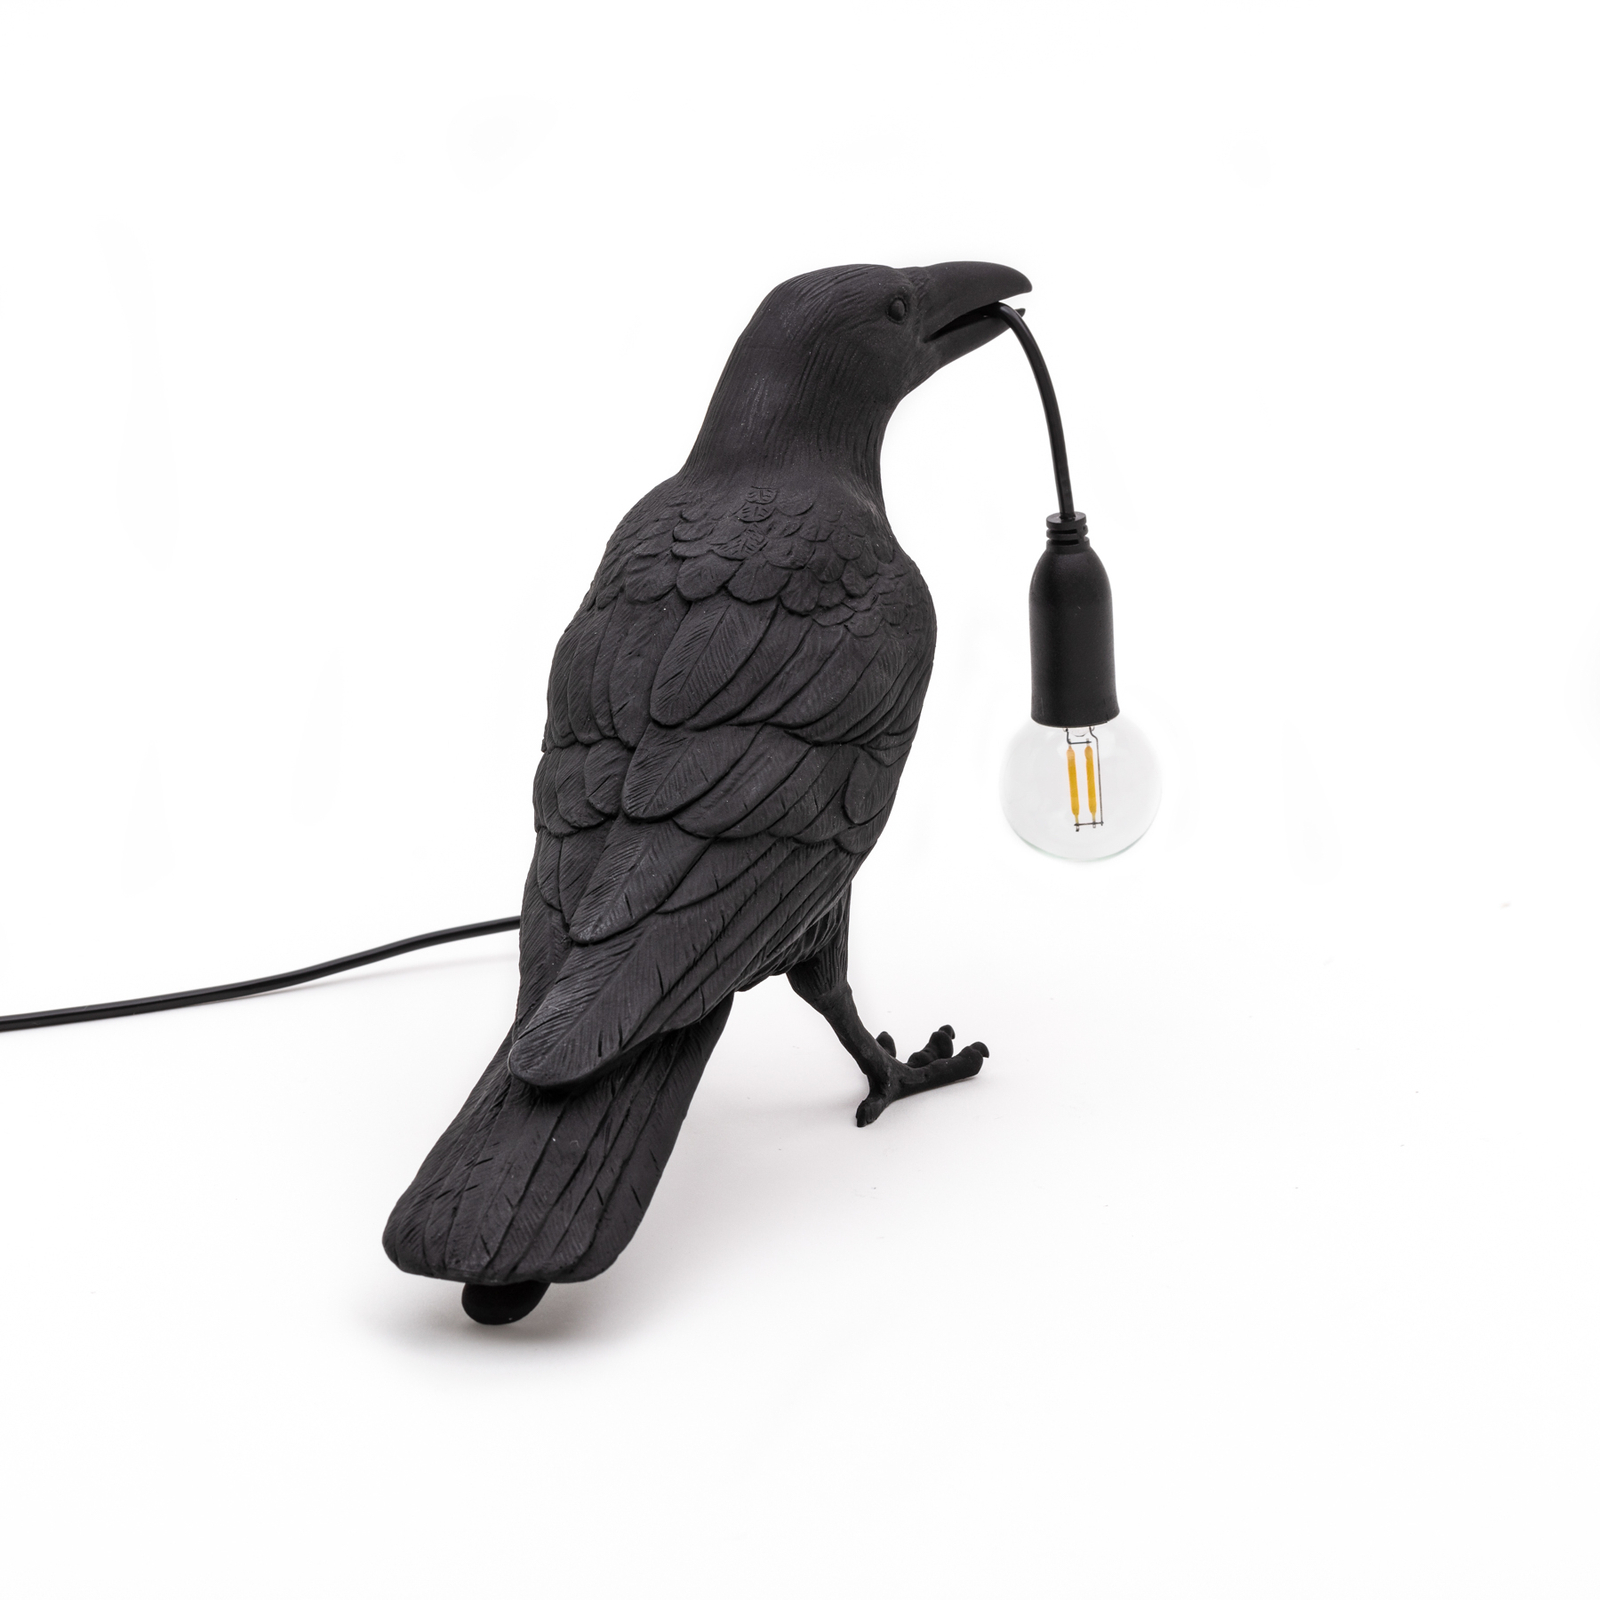 LED decoratie-tafellamp Bird Lamp, wachtend, zwart